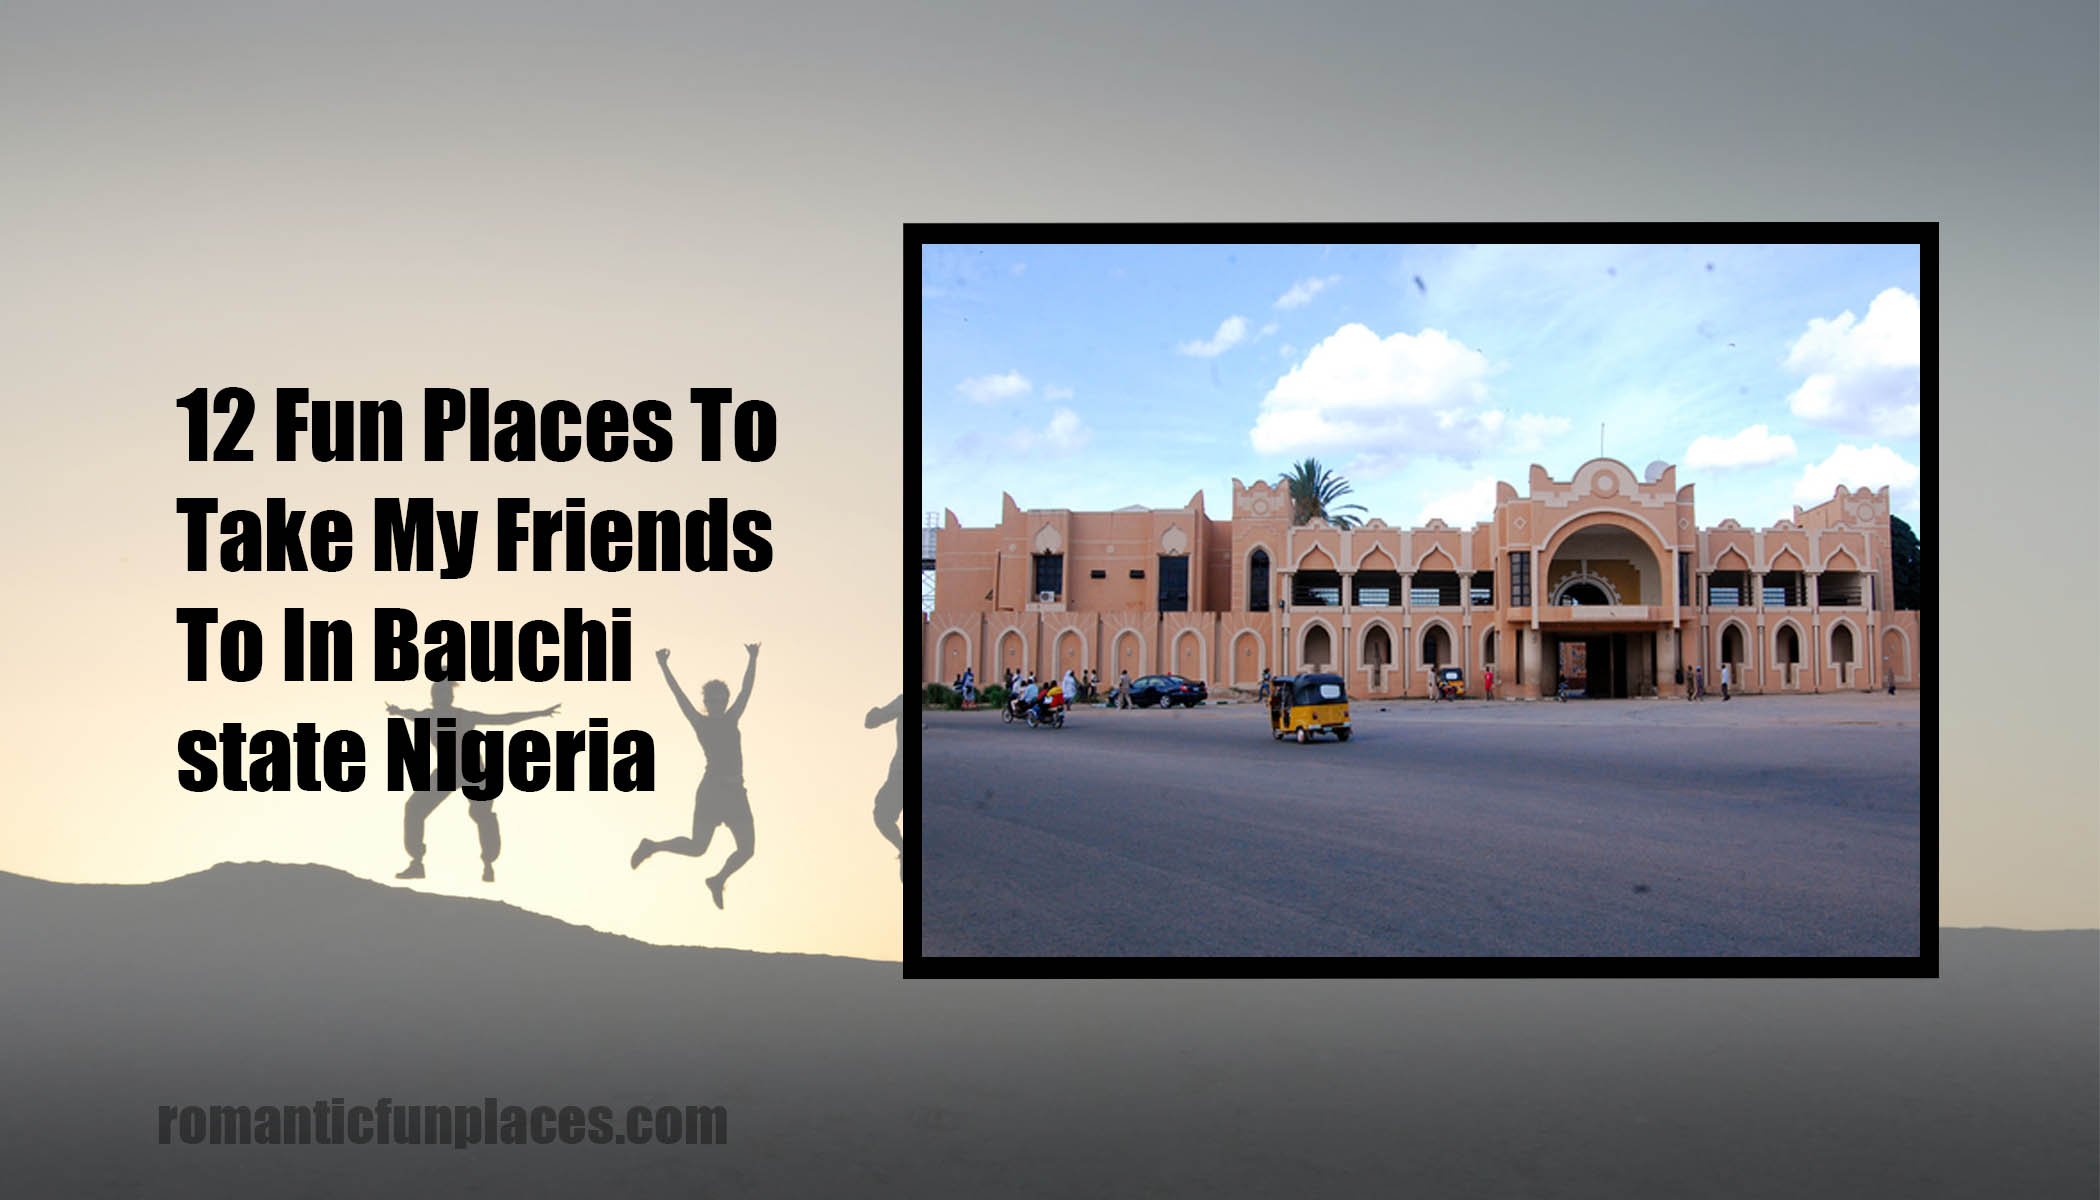 12 Fun Places To Take My Friends To In Bauchi state Nigeria